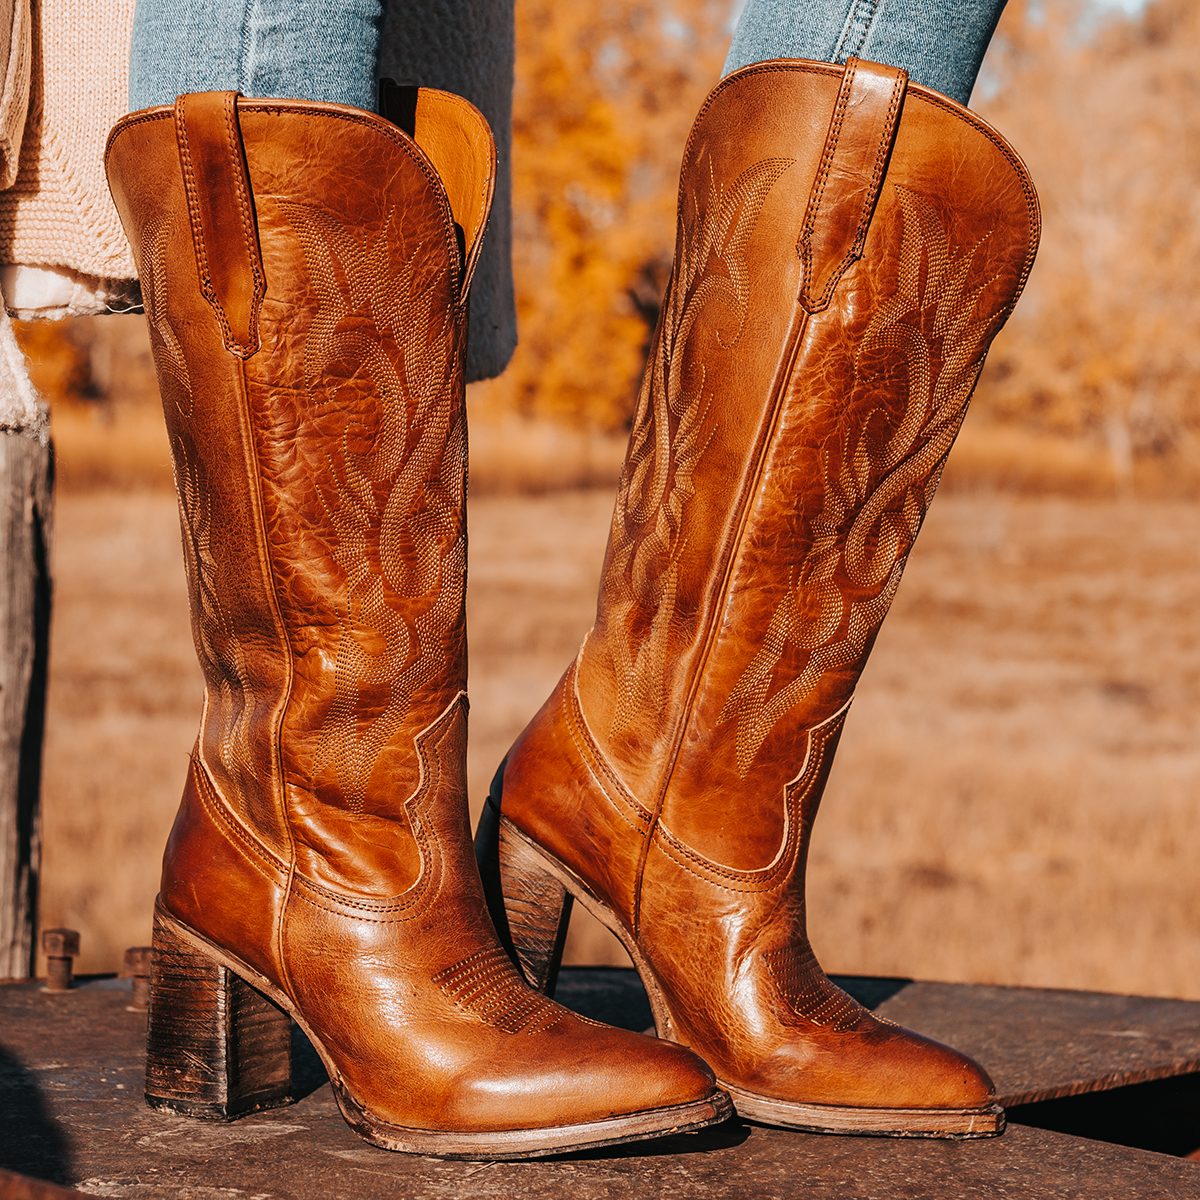 FREEBIRD women's Jackson tan leather high heel western boot with stitch detailing